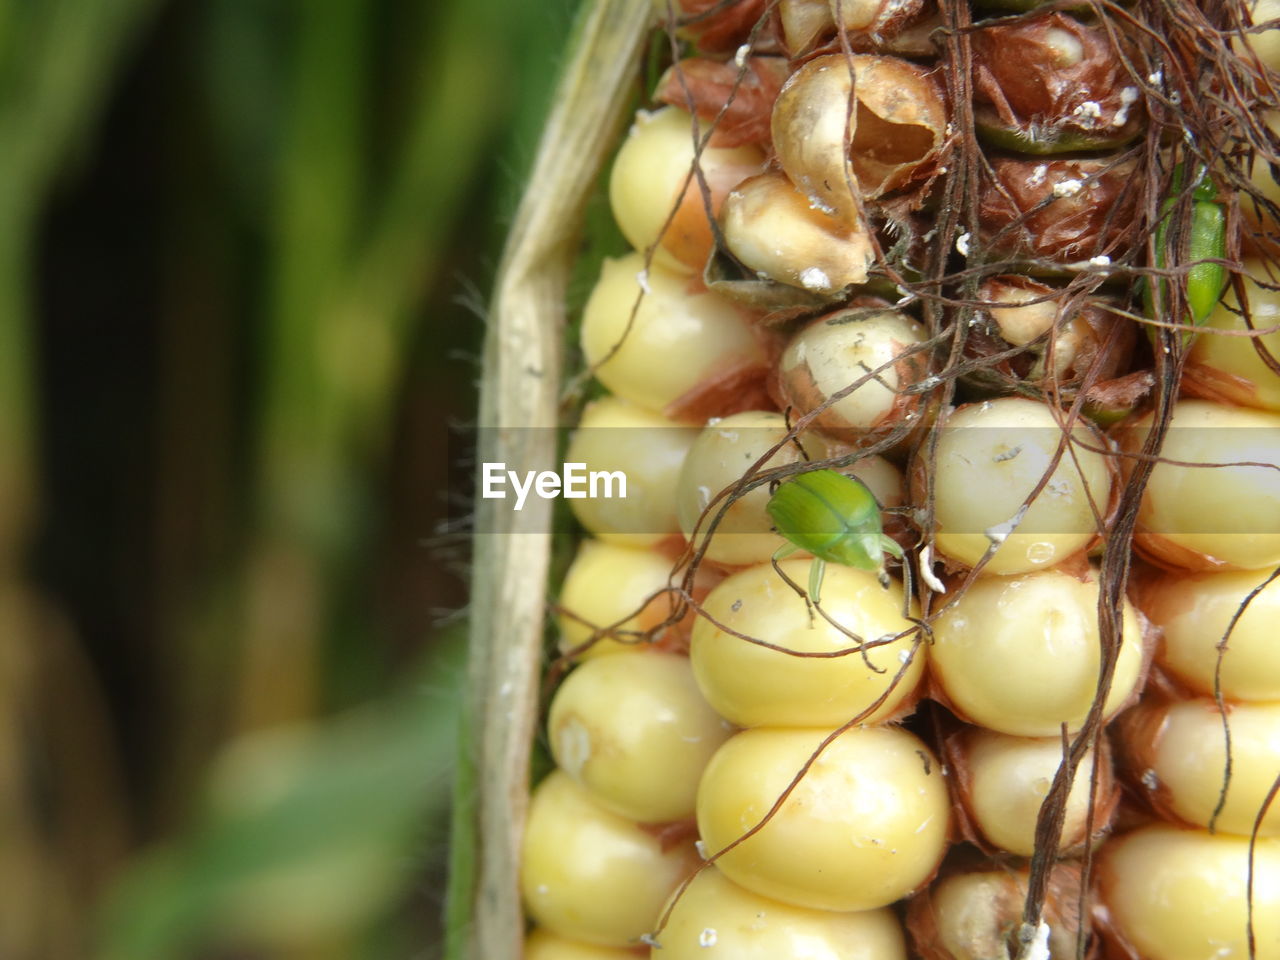 Close-up of bug on corn